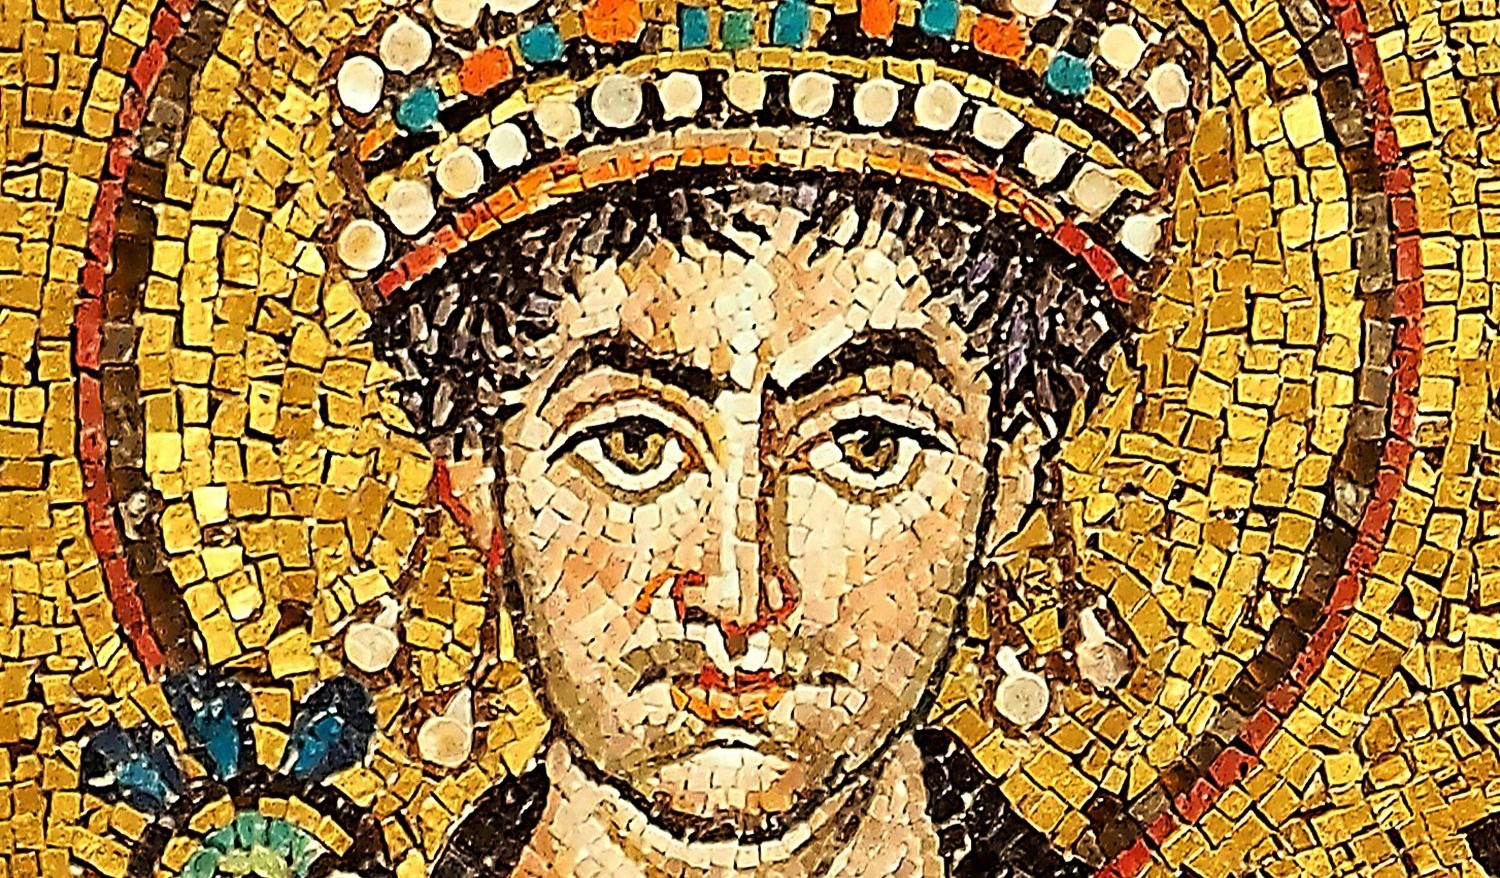 Justinian I, Emperor of the Byzantine Empire (527-565)